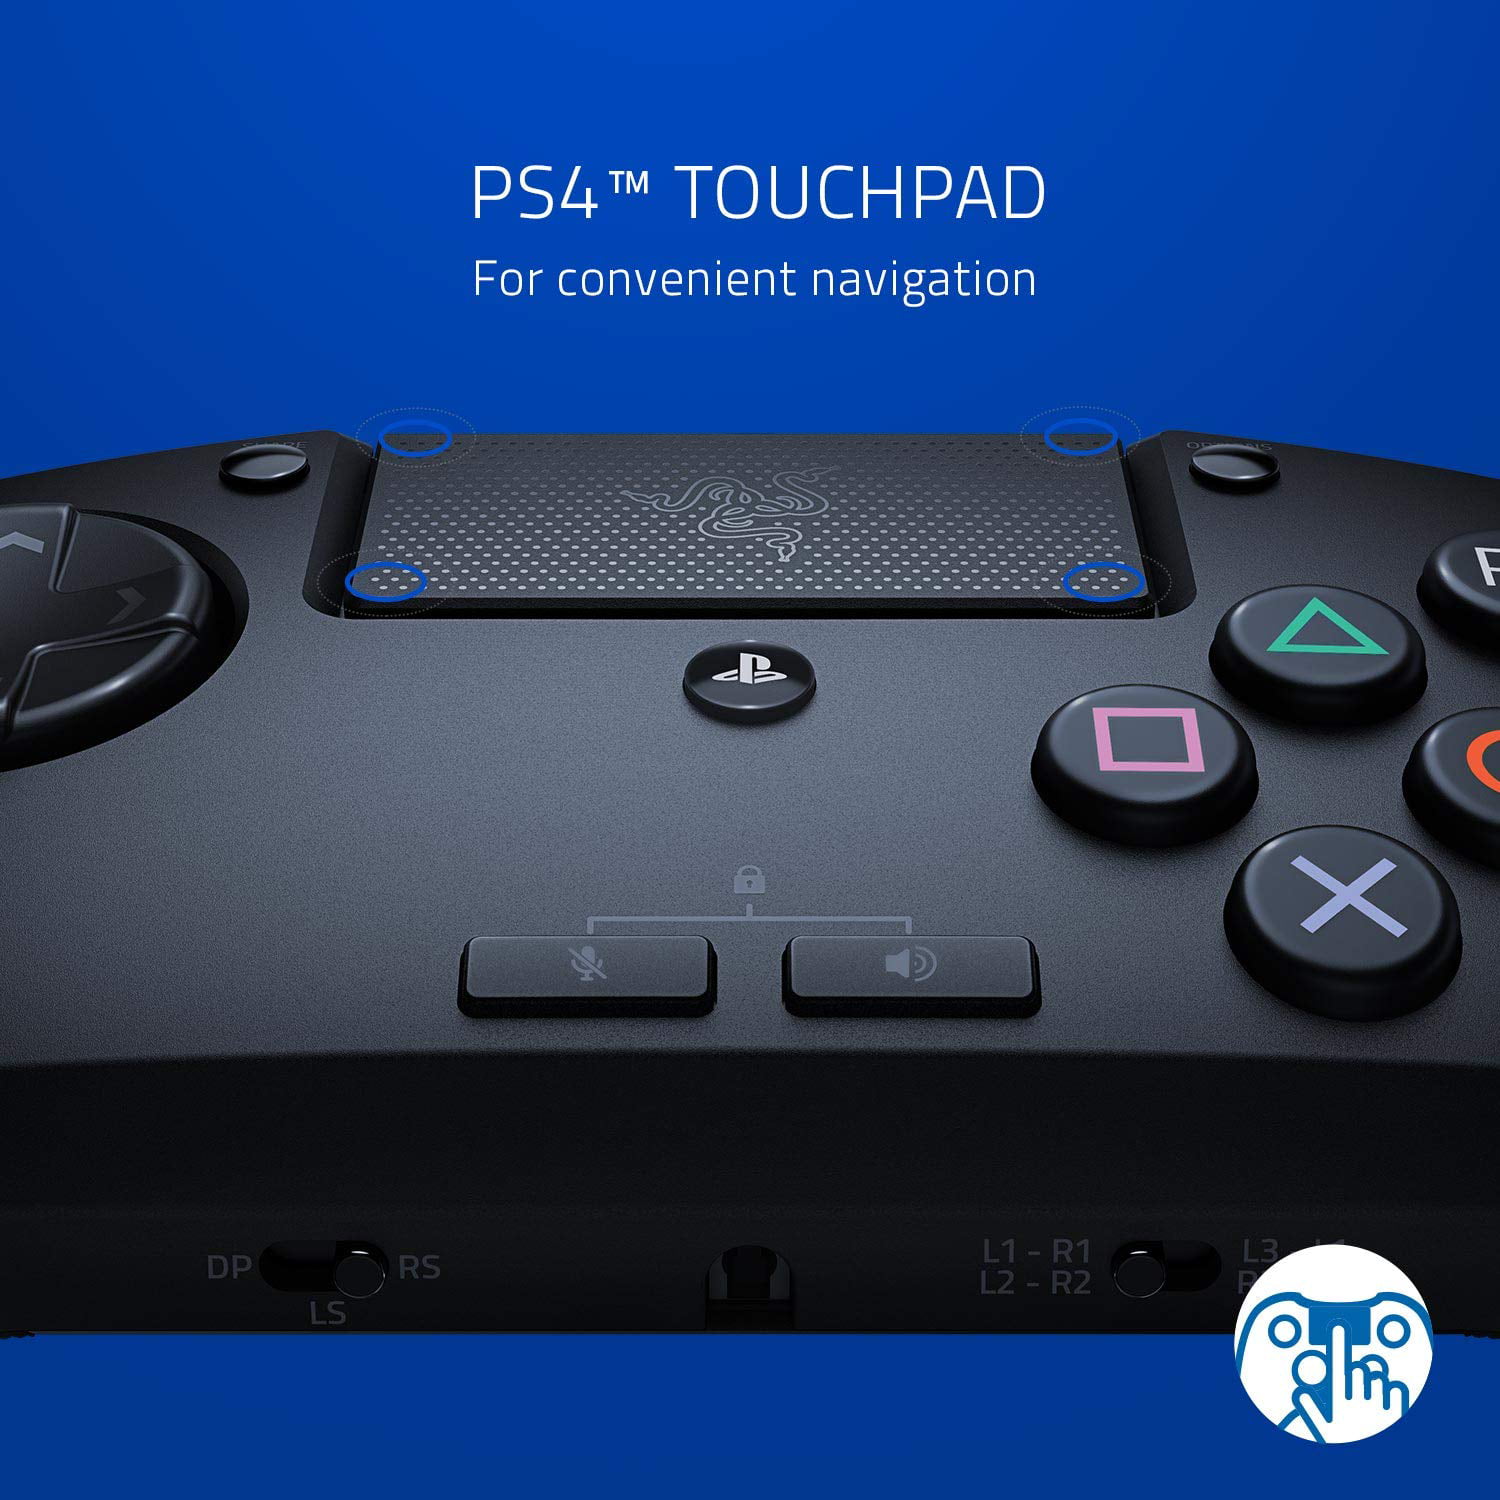 X-Ray – Playstation 4 PRO – GAMESPHERA